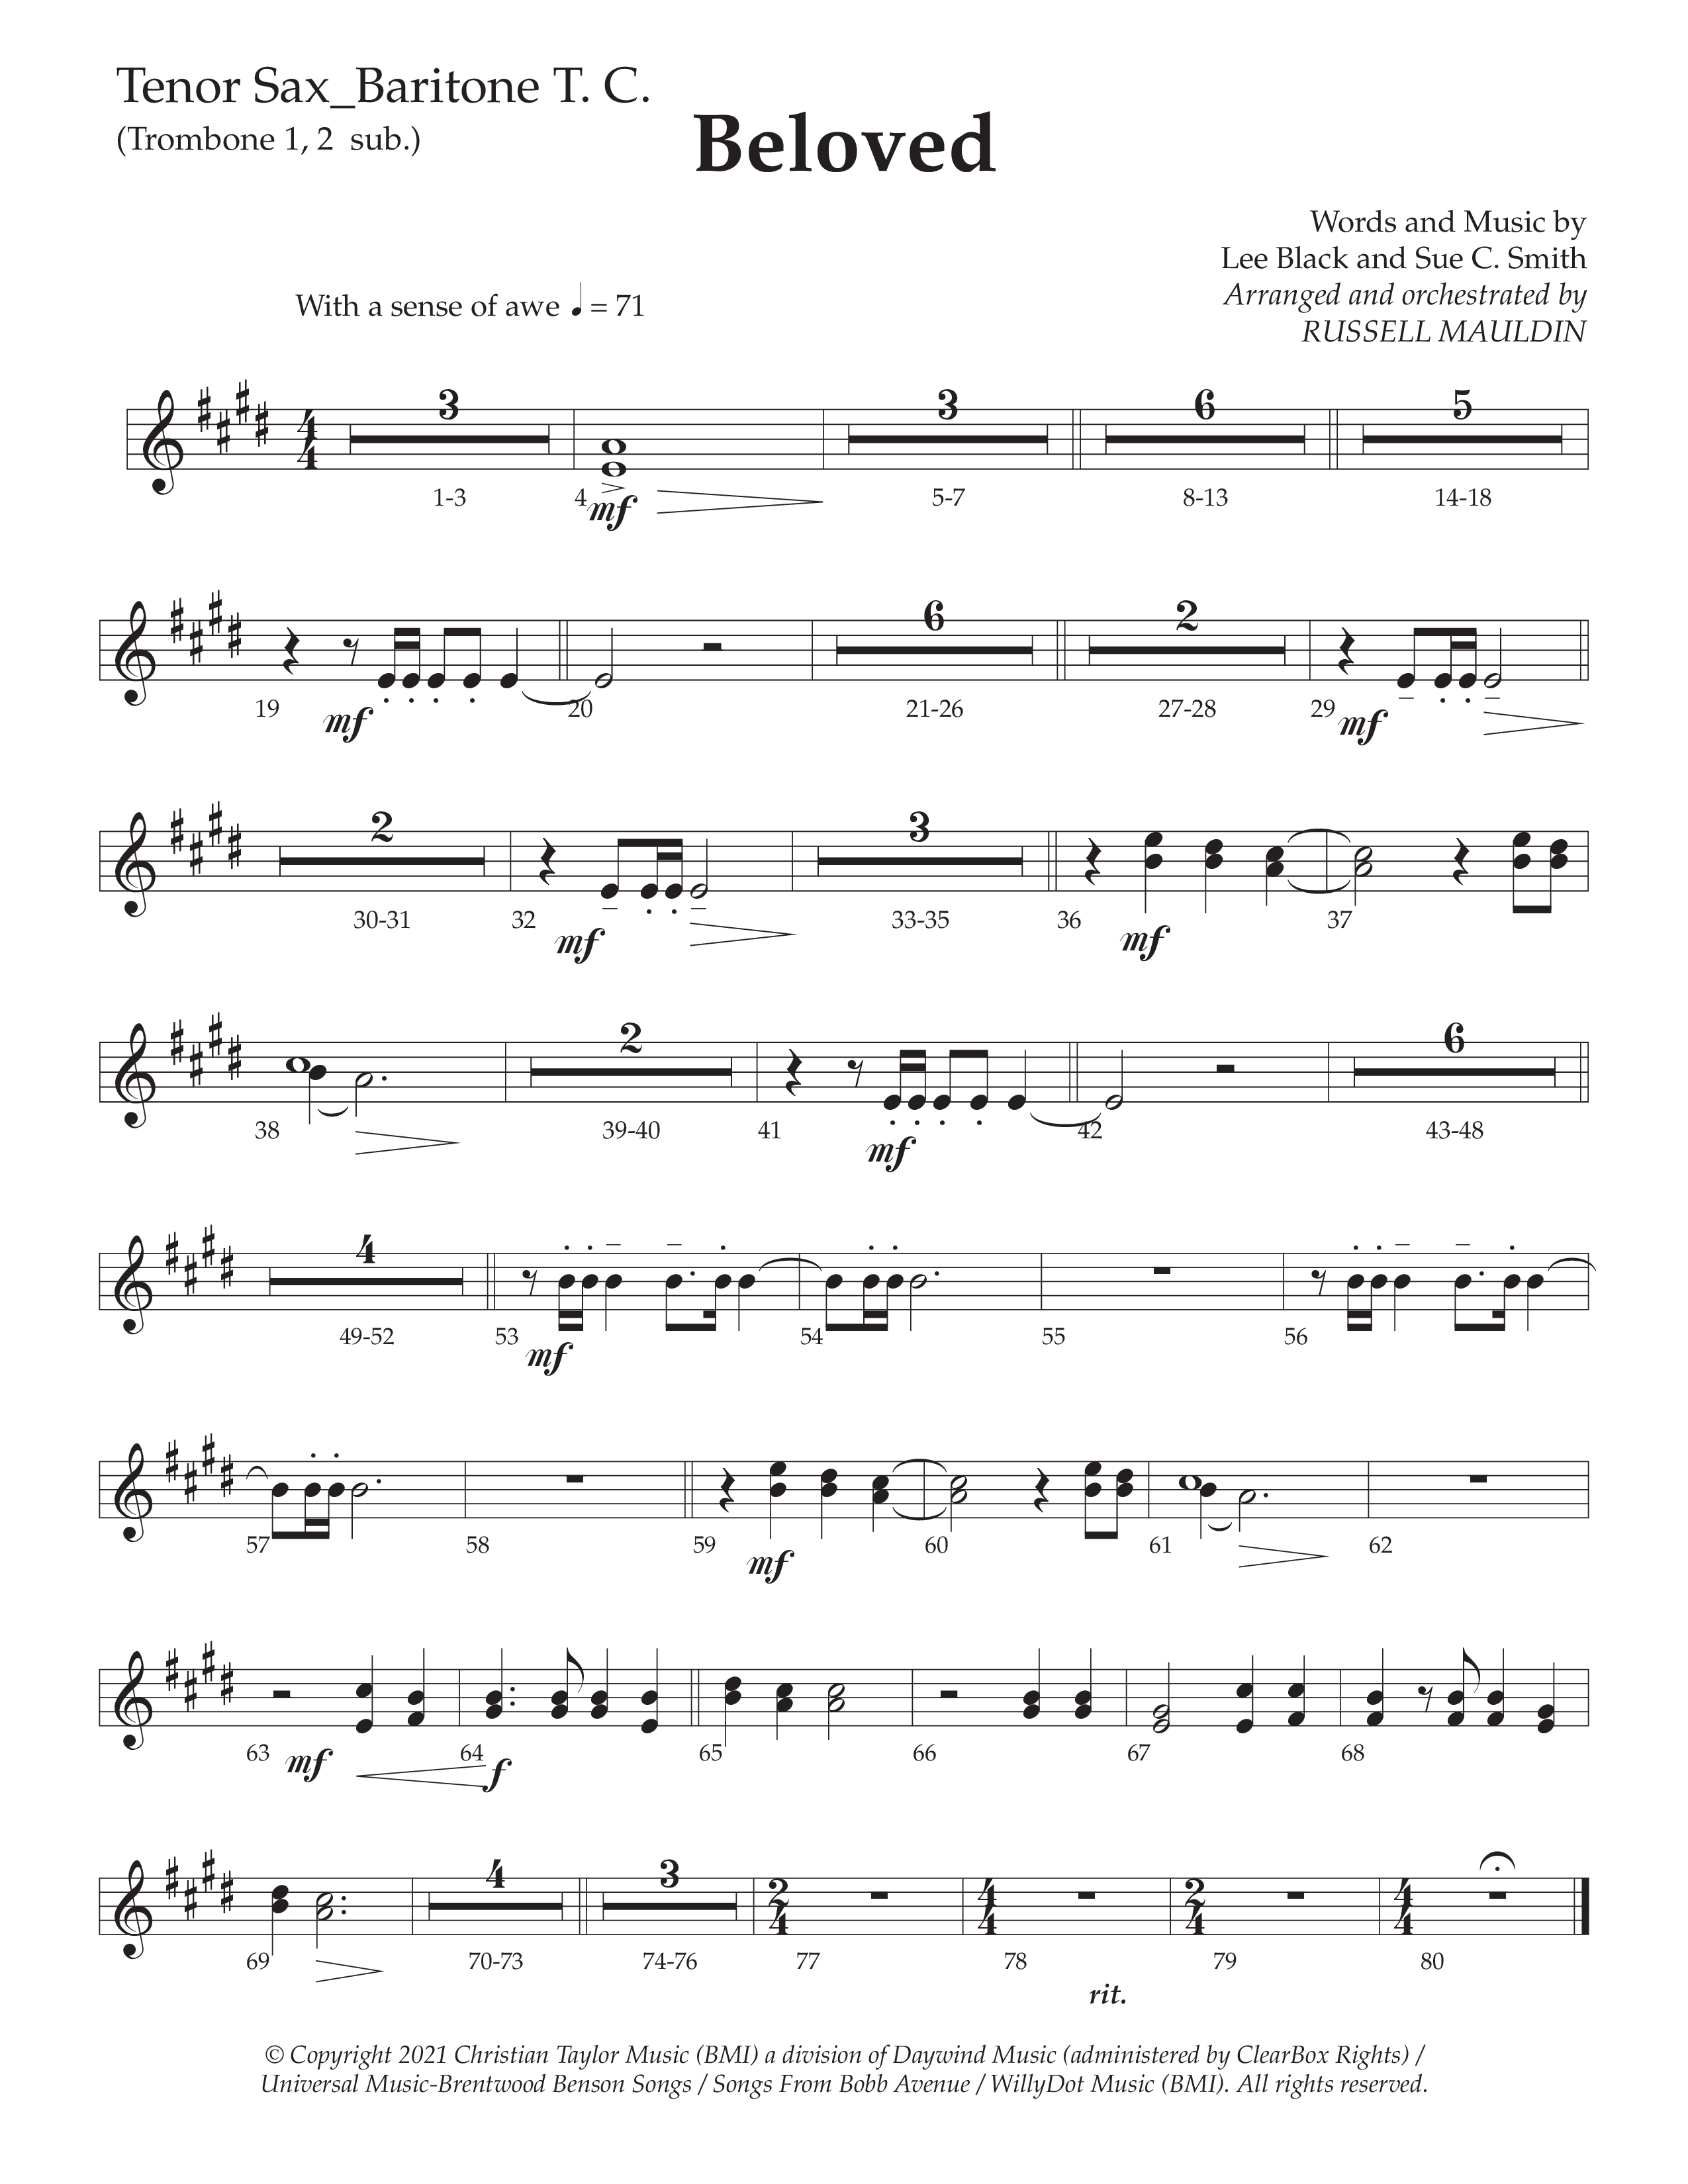 Beloved (Choral Anthem SATB) Tenor Sax/Baritone T.C. (Daywind Worship / Arr. Russell Mauldin)